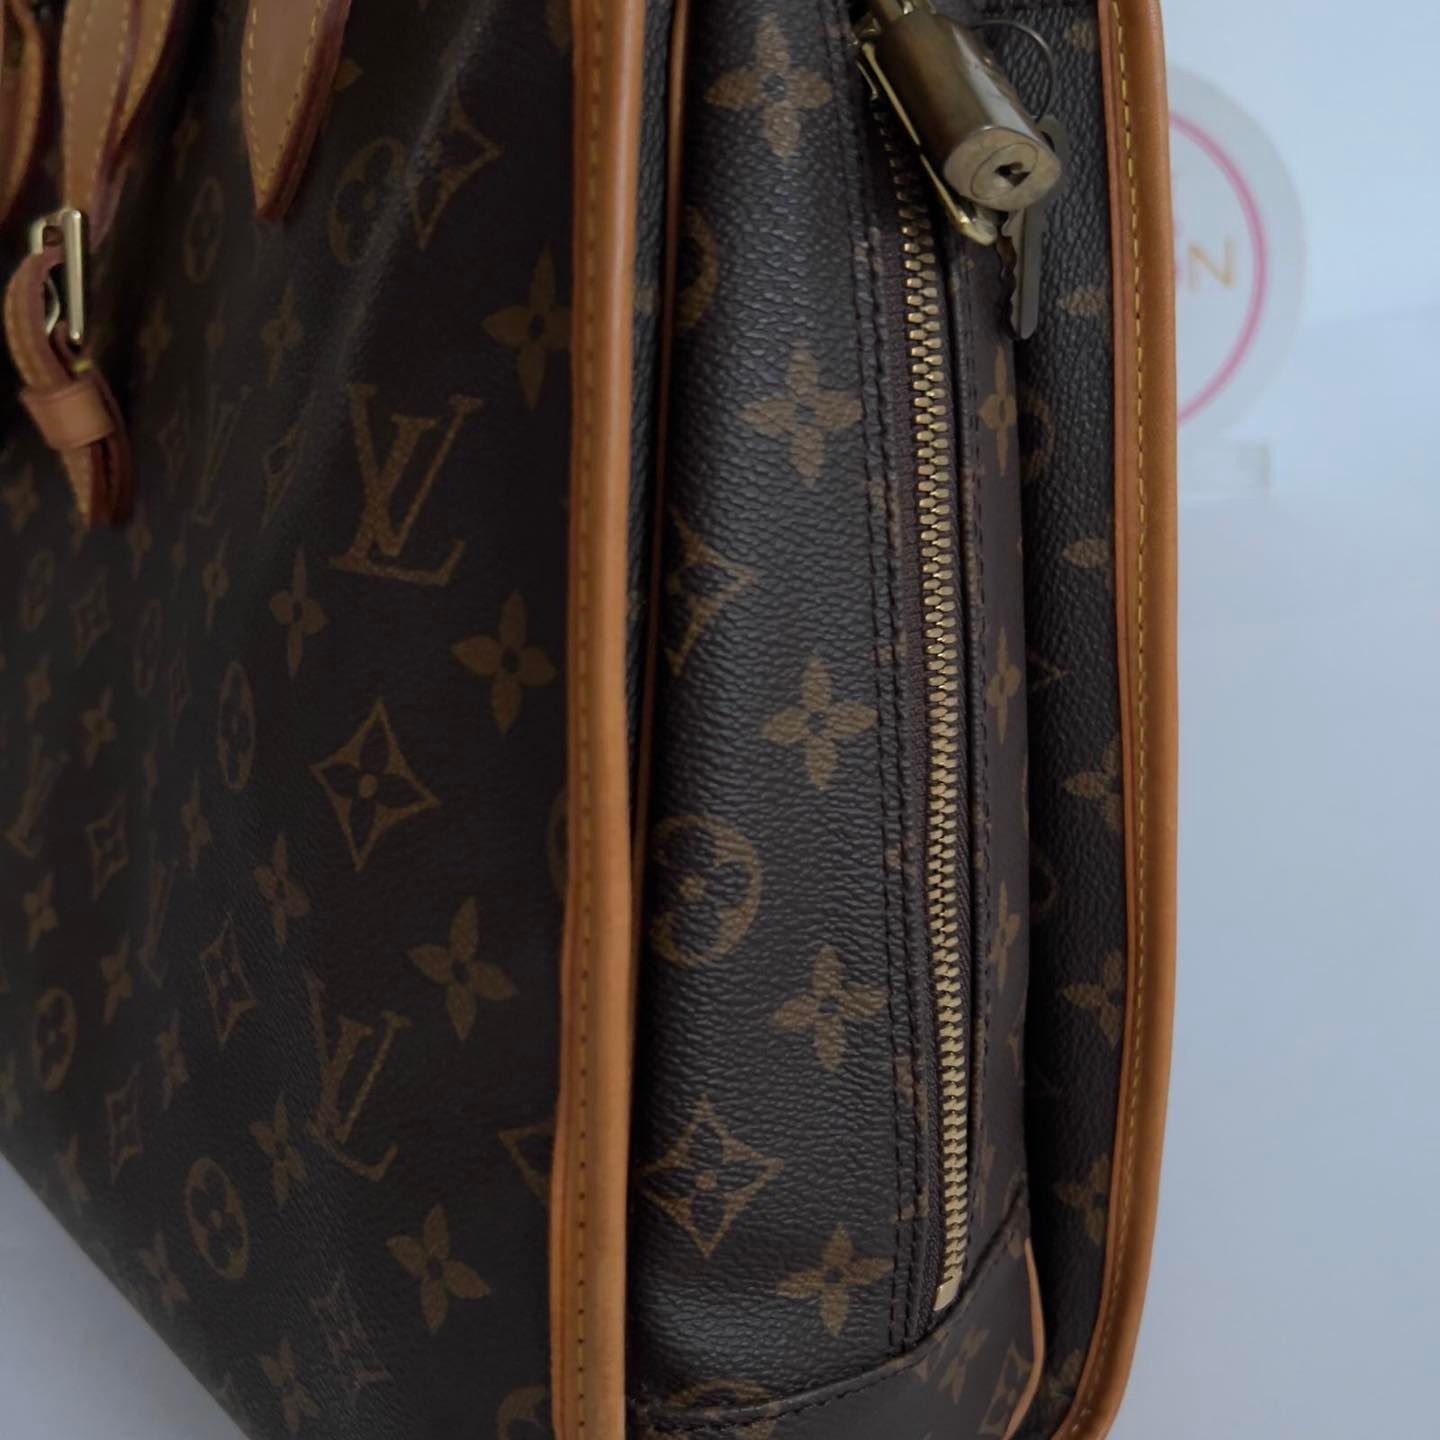 Louis Vuitton Monogram Rivoli Briefcase Bag. Made in France. DC: MI1927